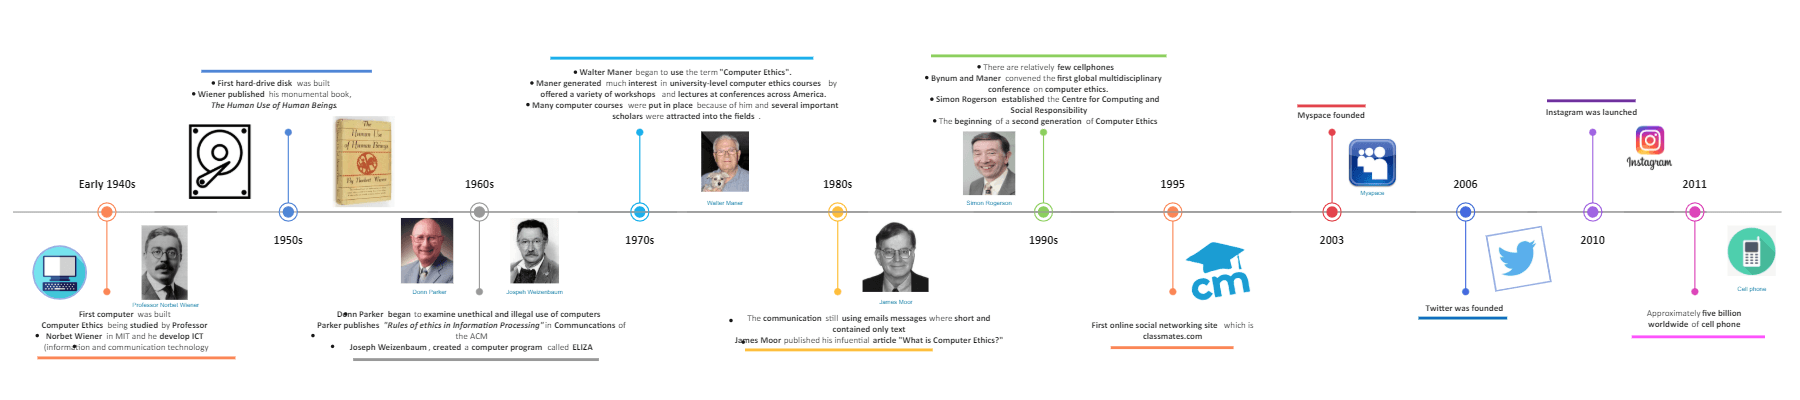 Computer Ethics Timeline Infographic